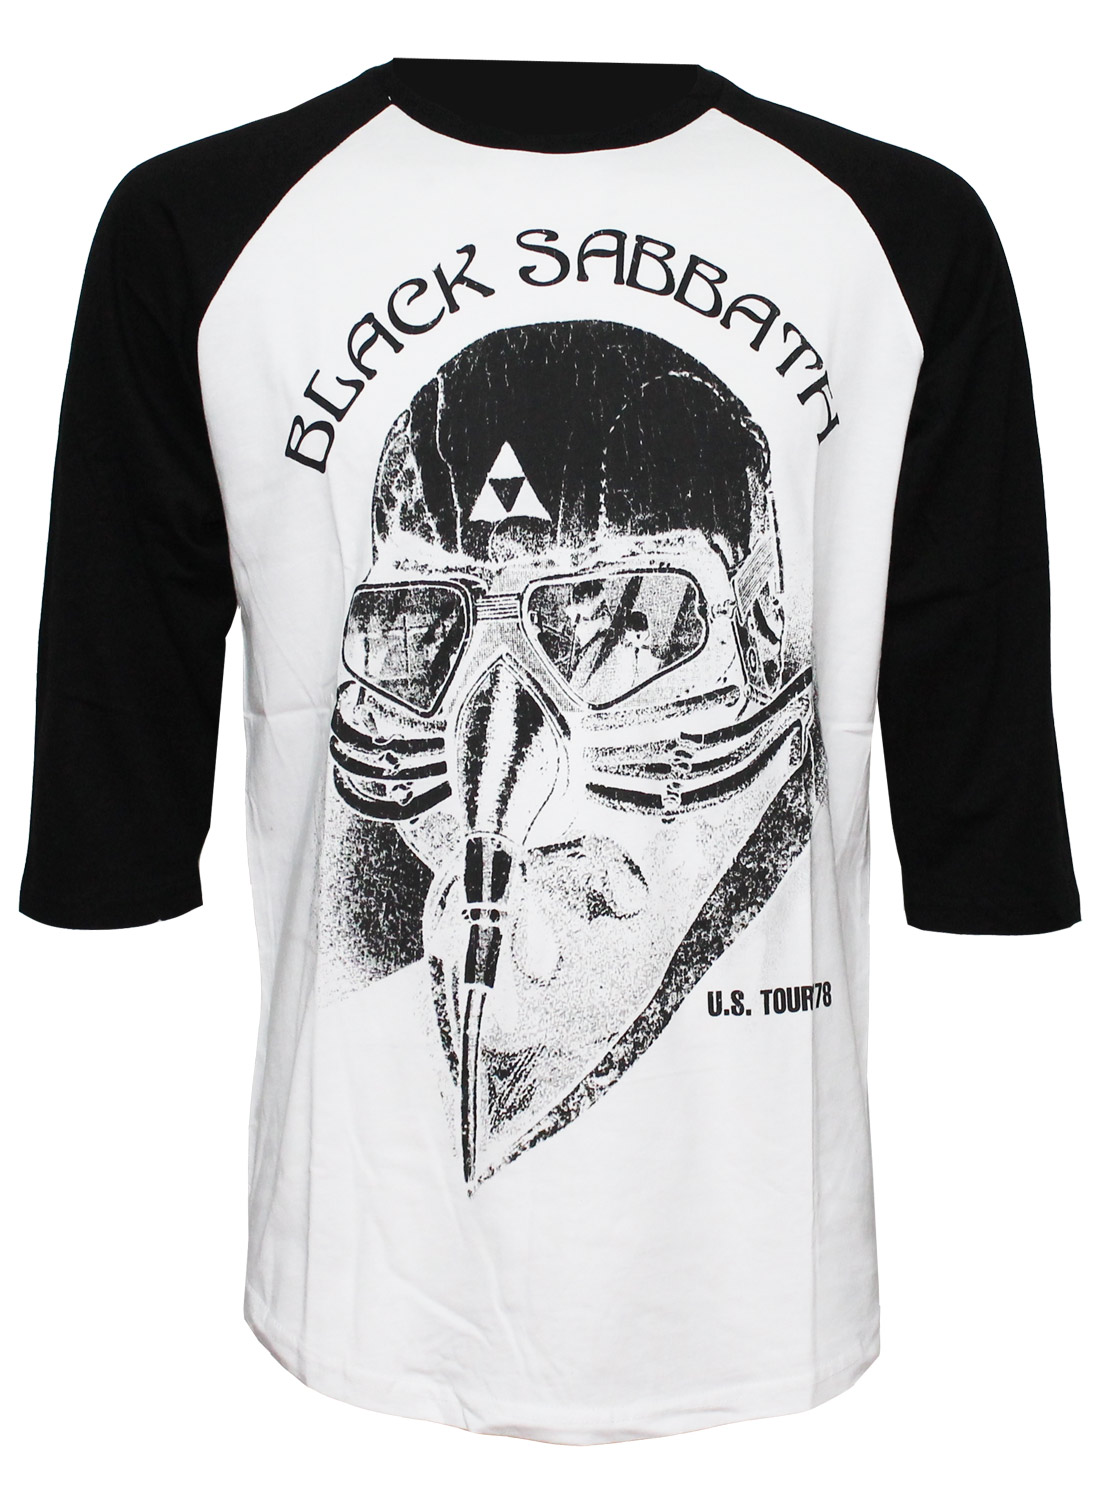 Black Sabbath Baseball T-shirt